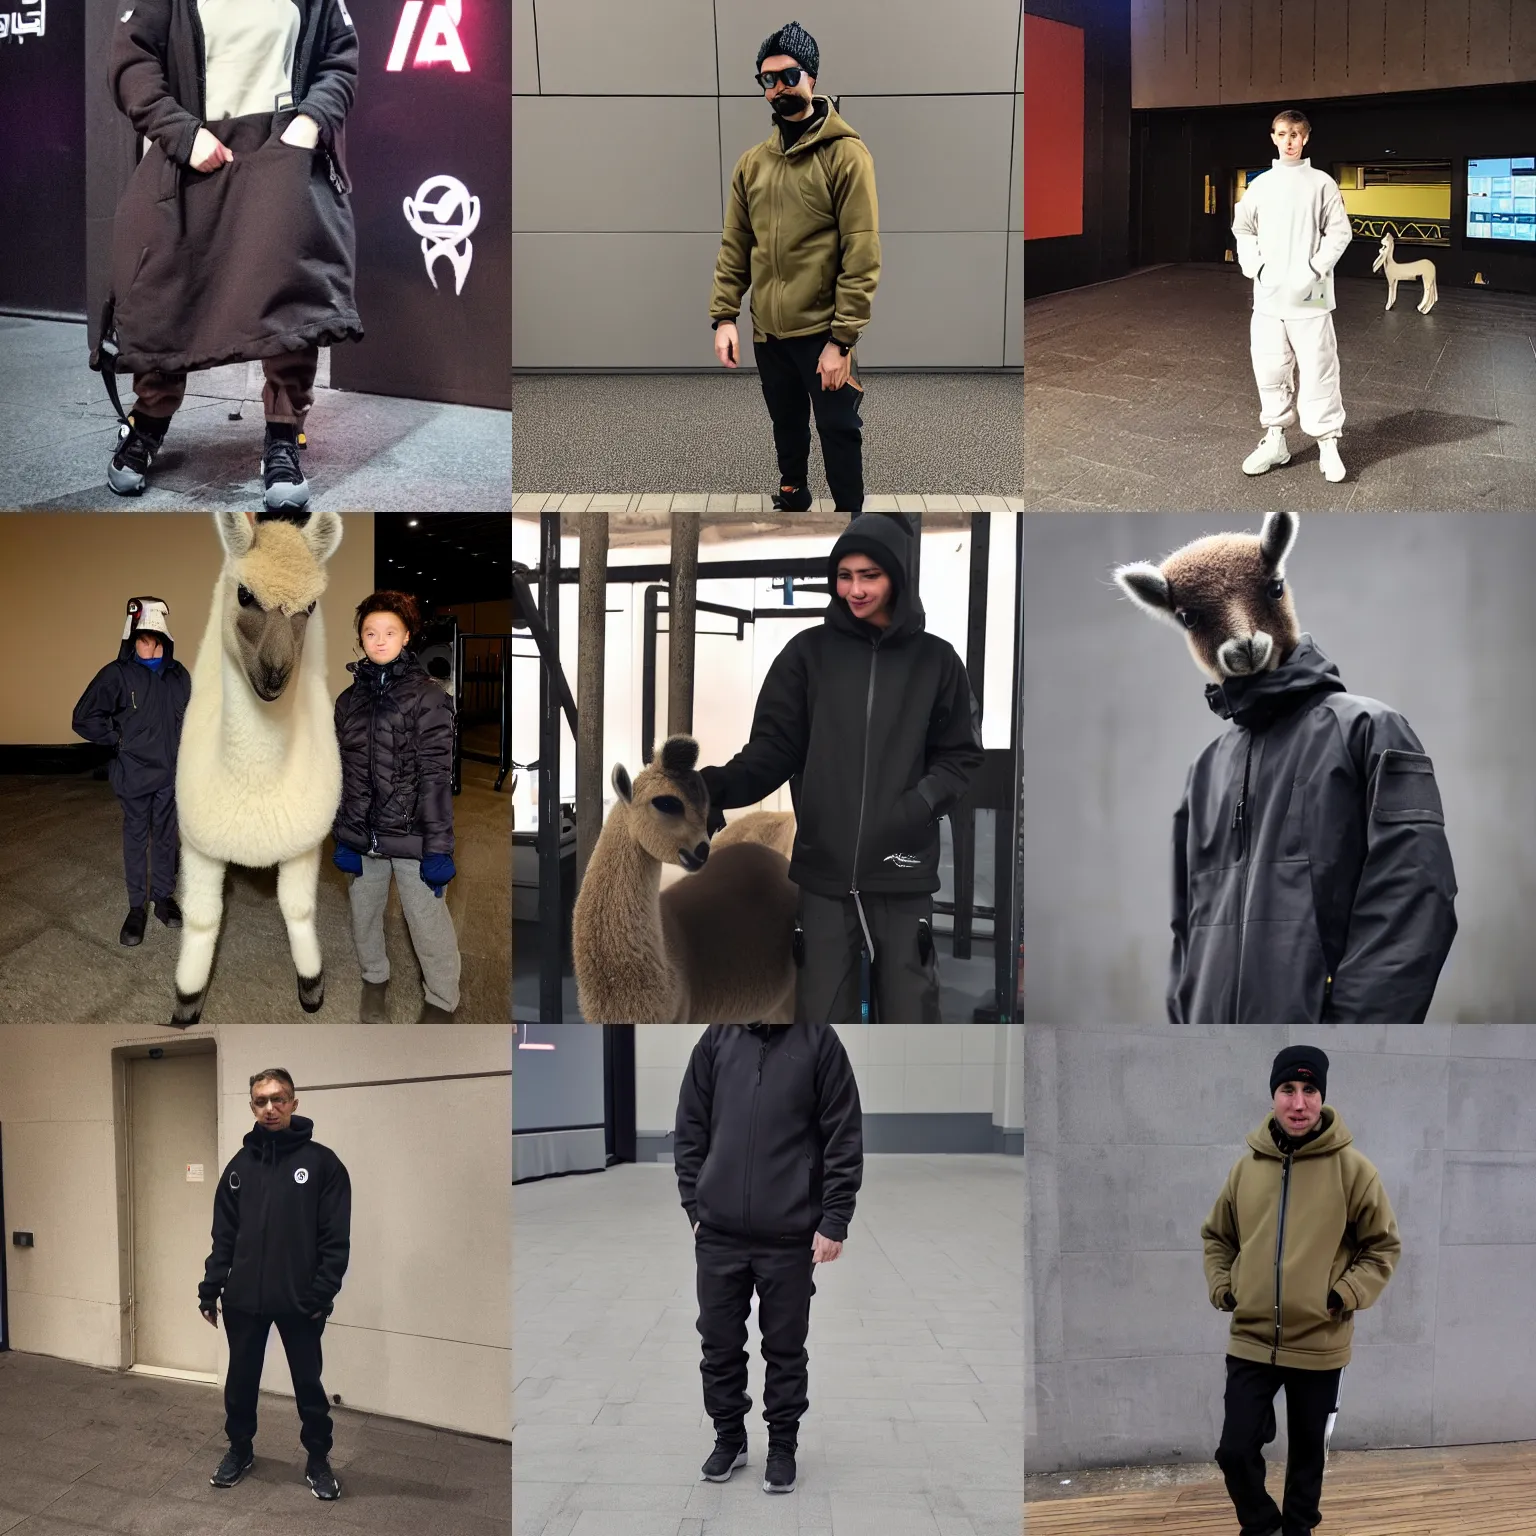 Prompt: Alpaka dressed in techwear at cinema